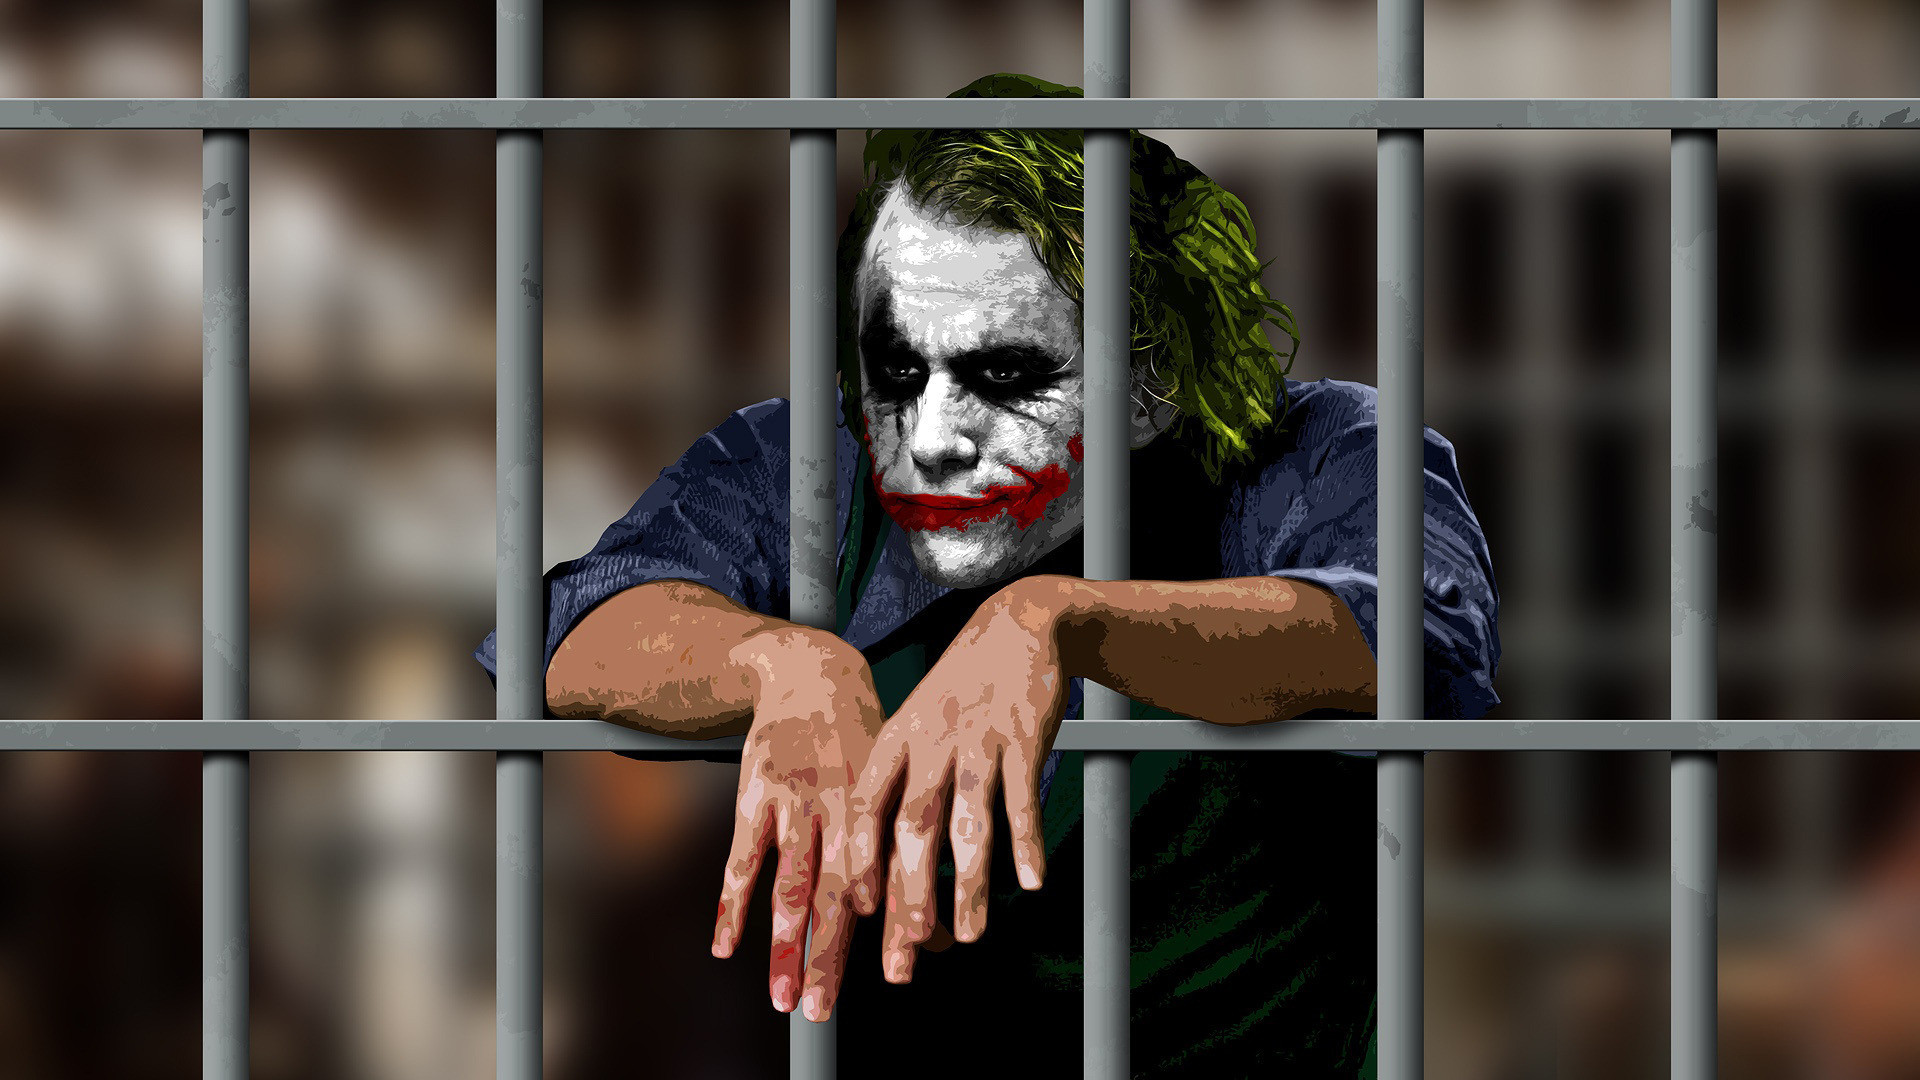 Batman Joker Joker Wallpaper Dark Knight Rises